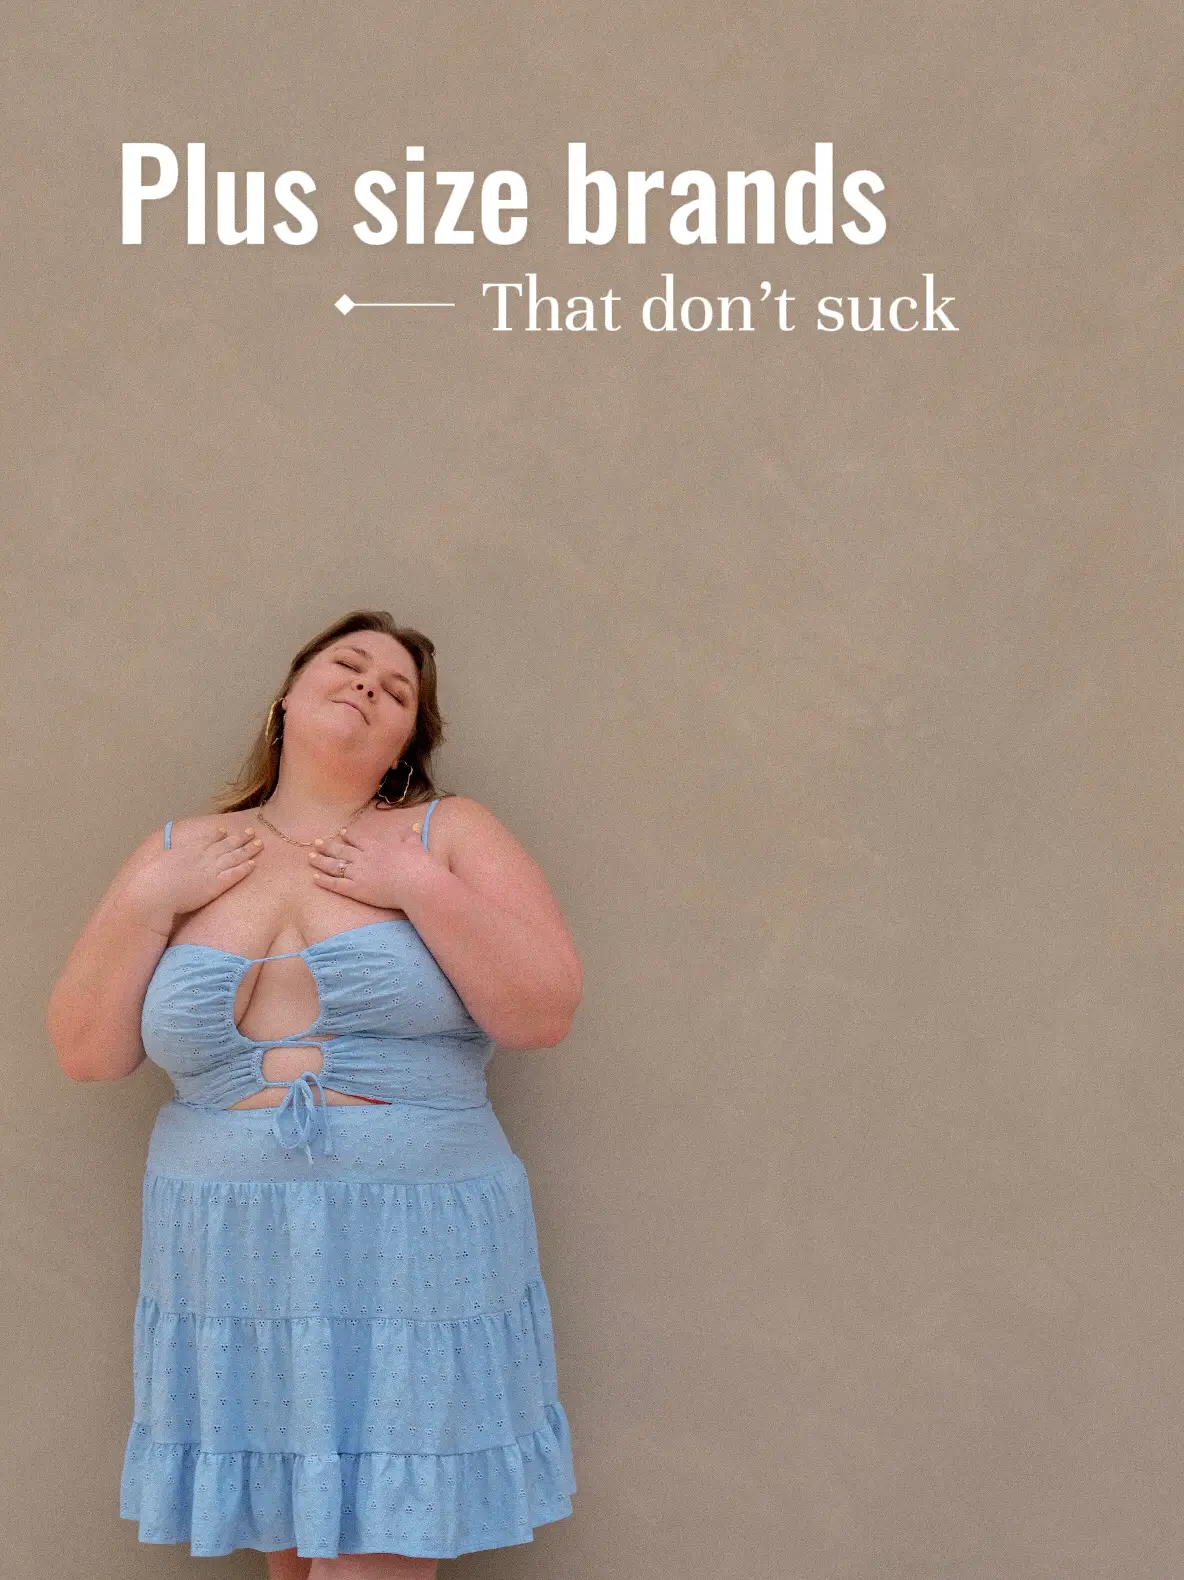 Debunking Plus-Size Fitness Myths - Dia & Co